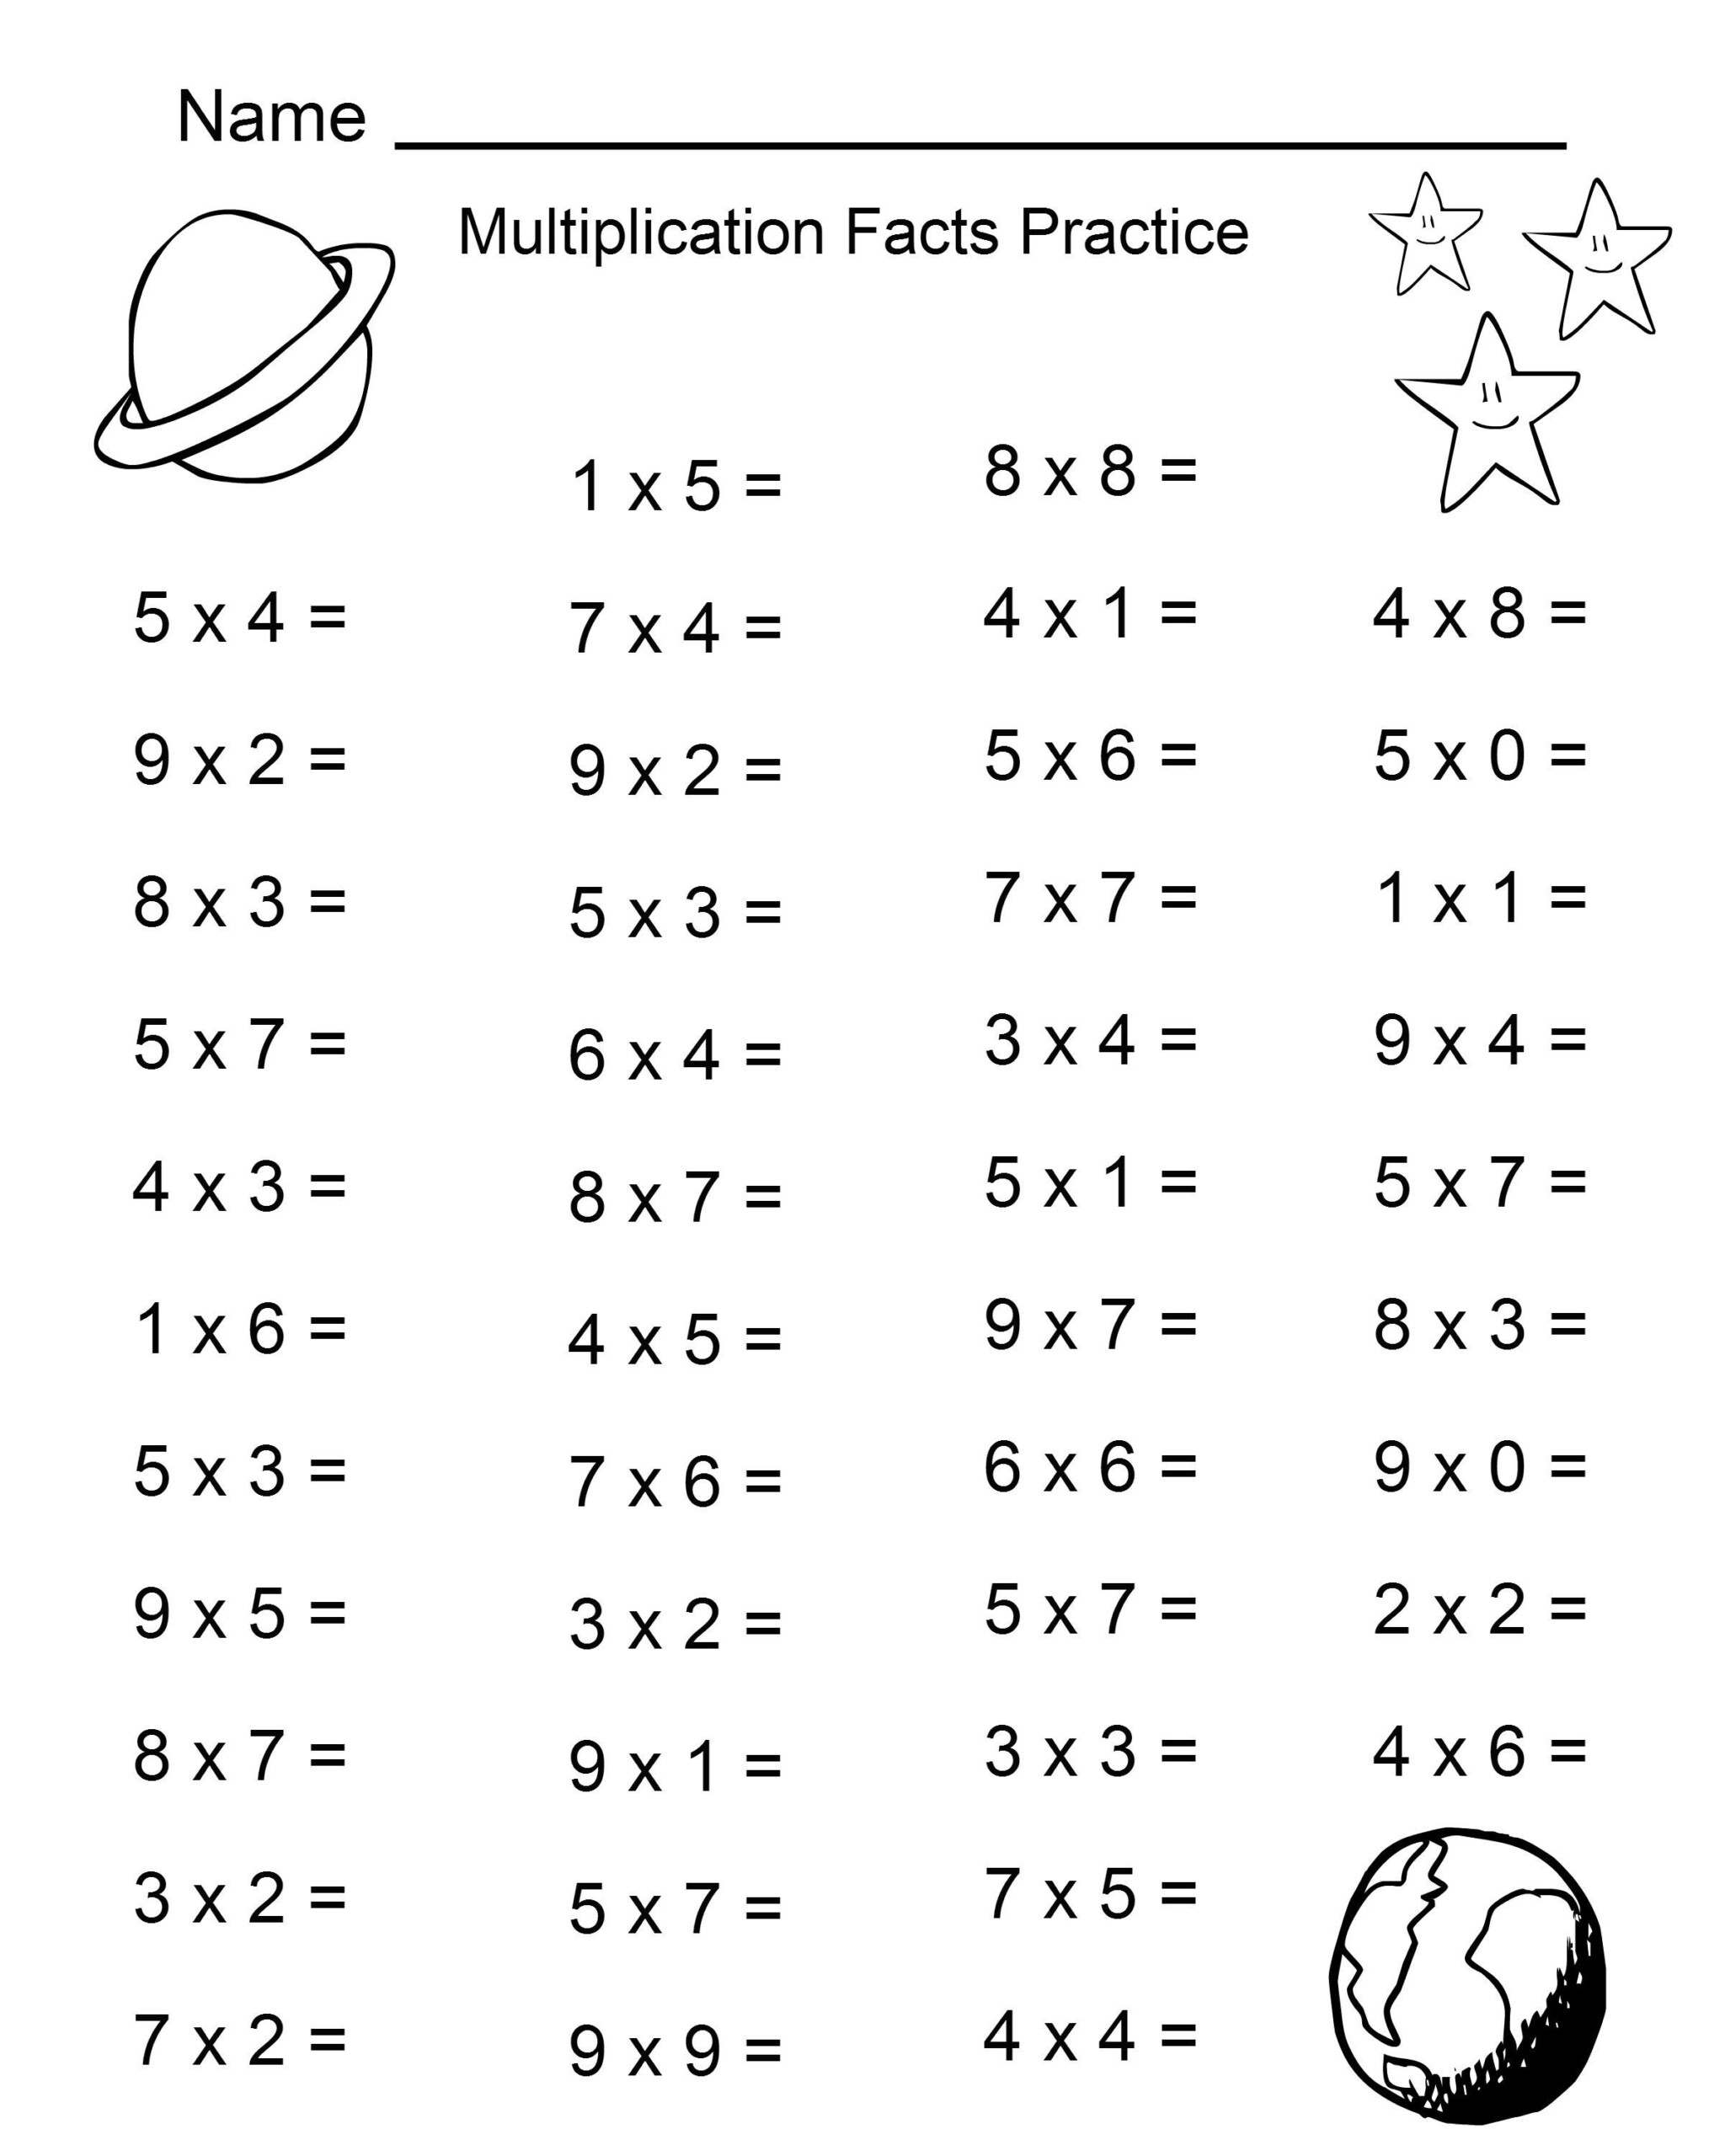 Single Multiplication Worksheets For Students | Educative throughout Printable Multiplication Worksheets Grade 4